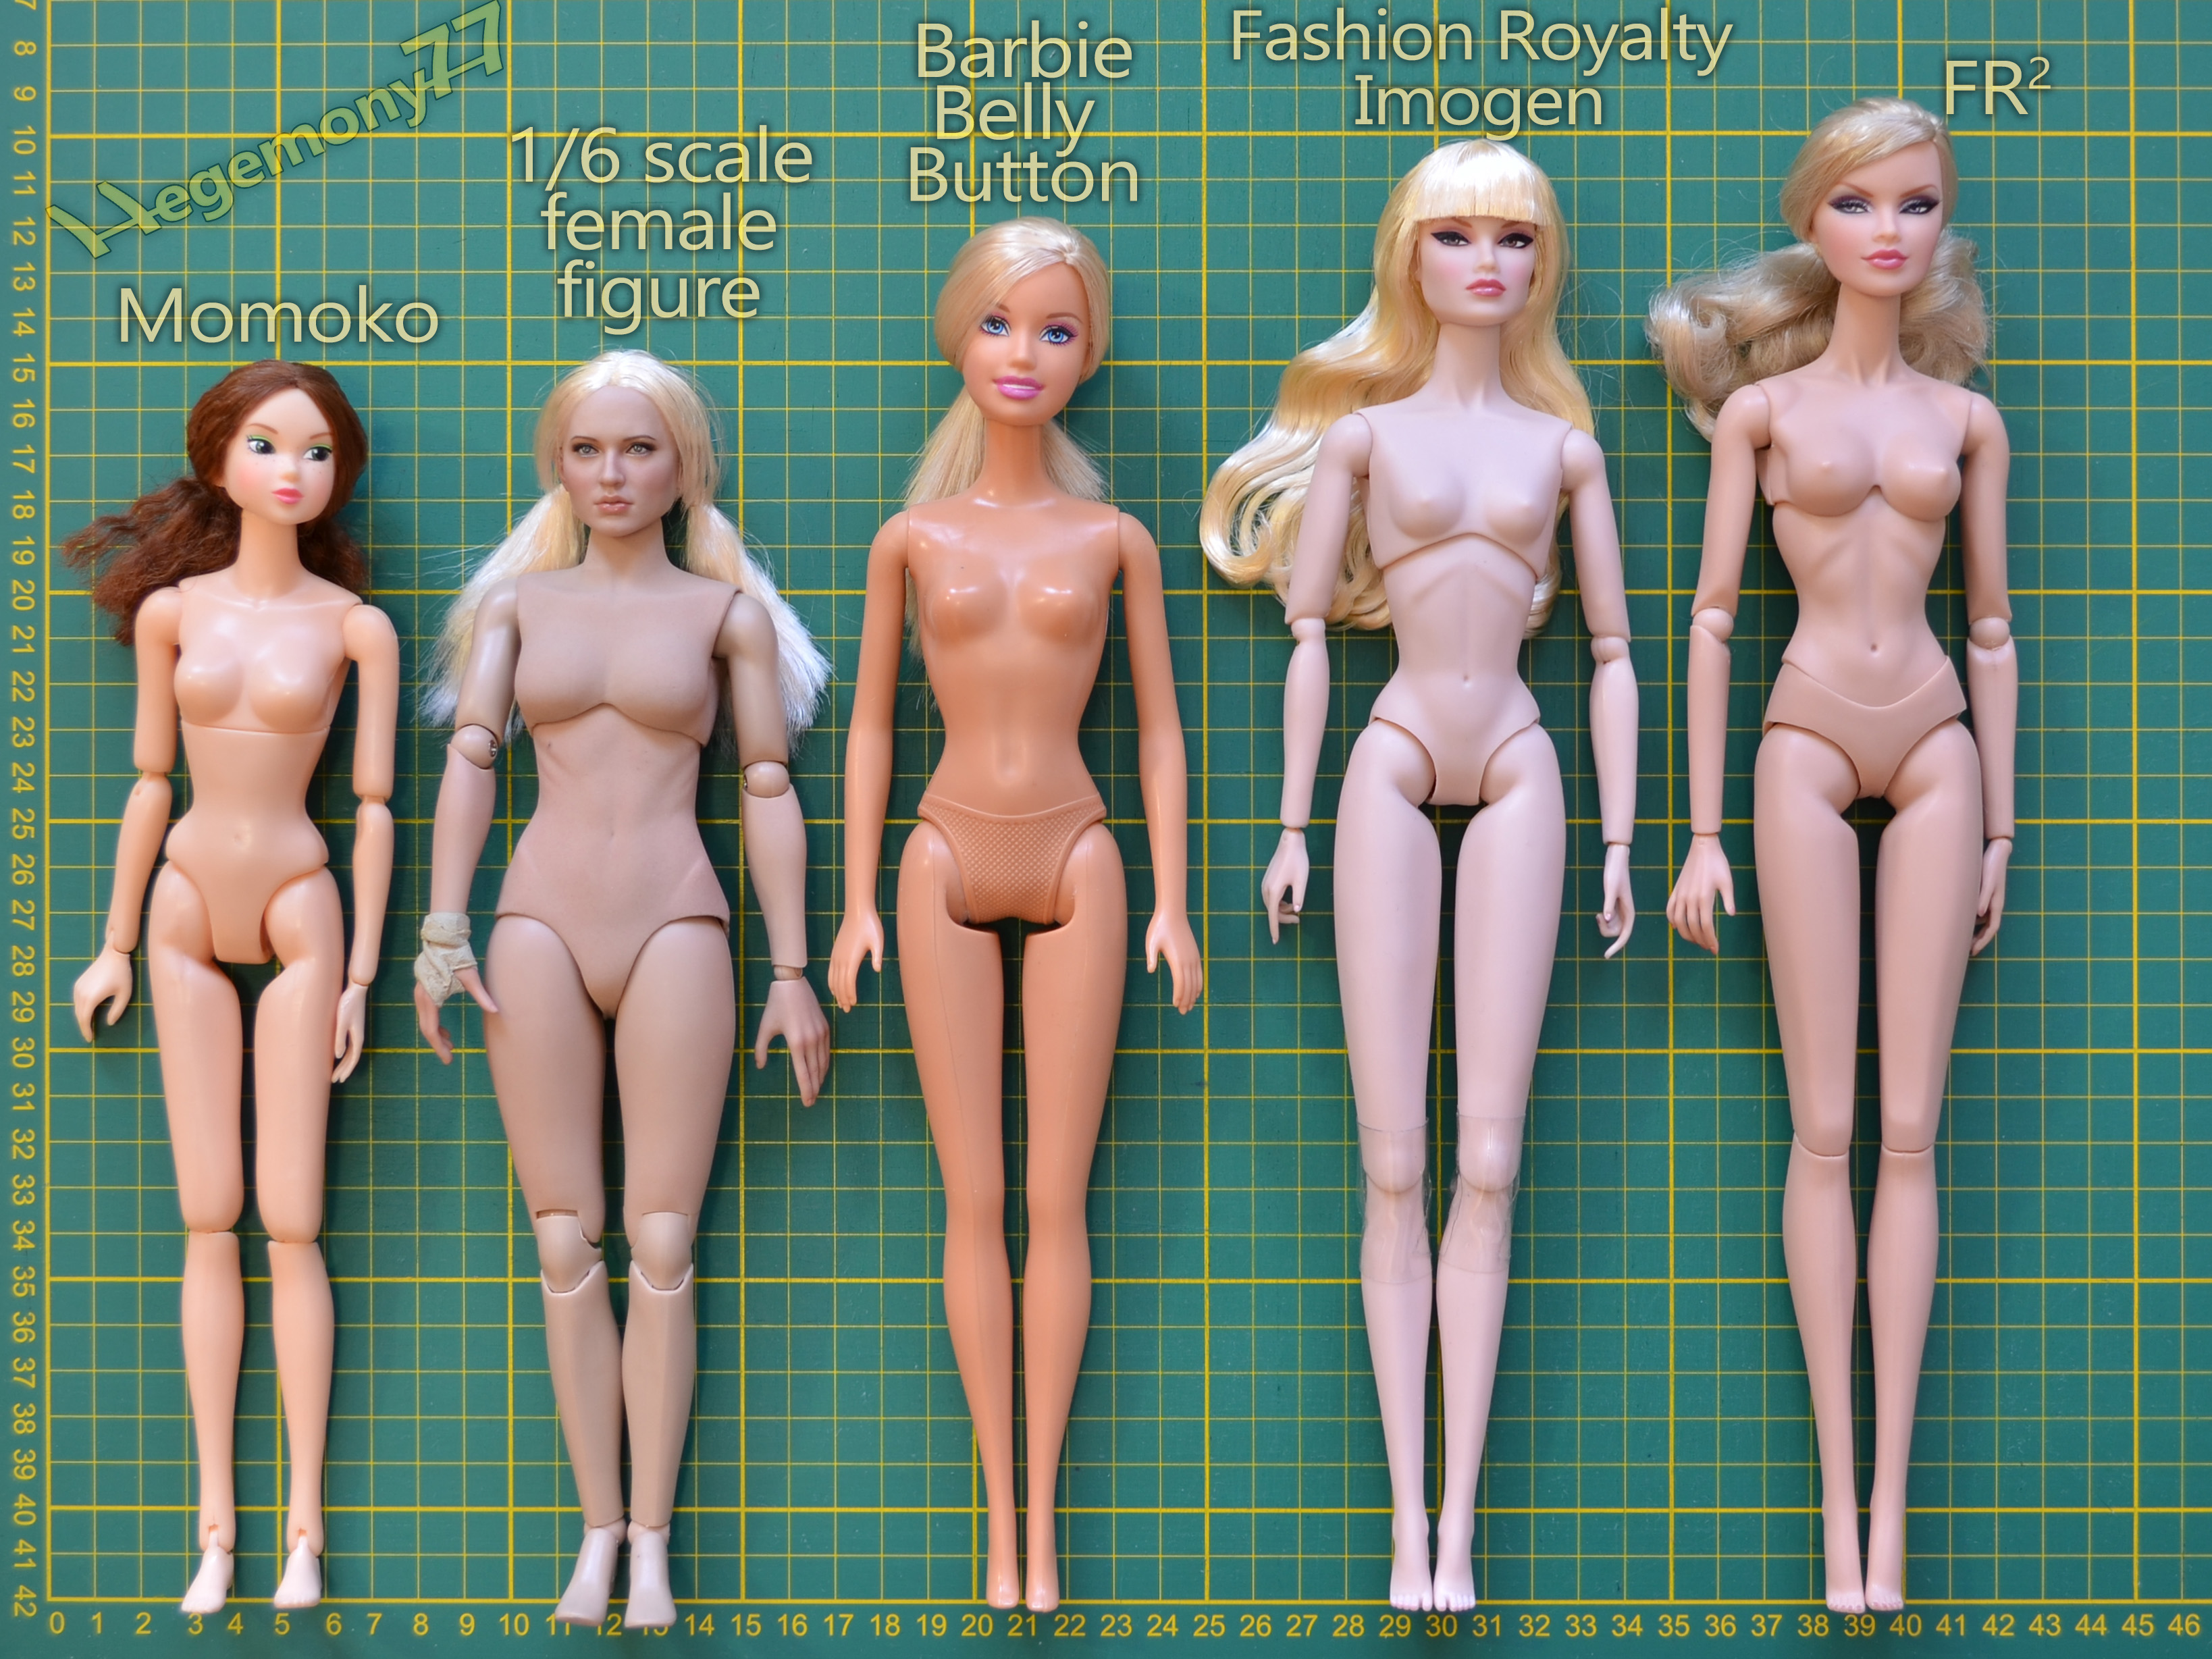 Doll comparison photo - Momoko - 1/ 6 scale female figure - Barbie Belly Bu...